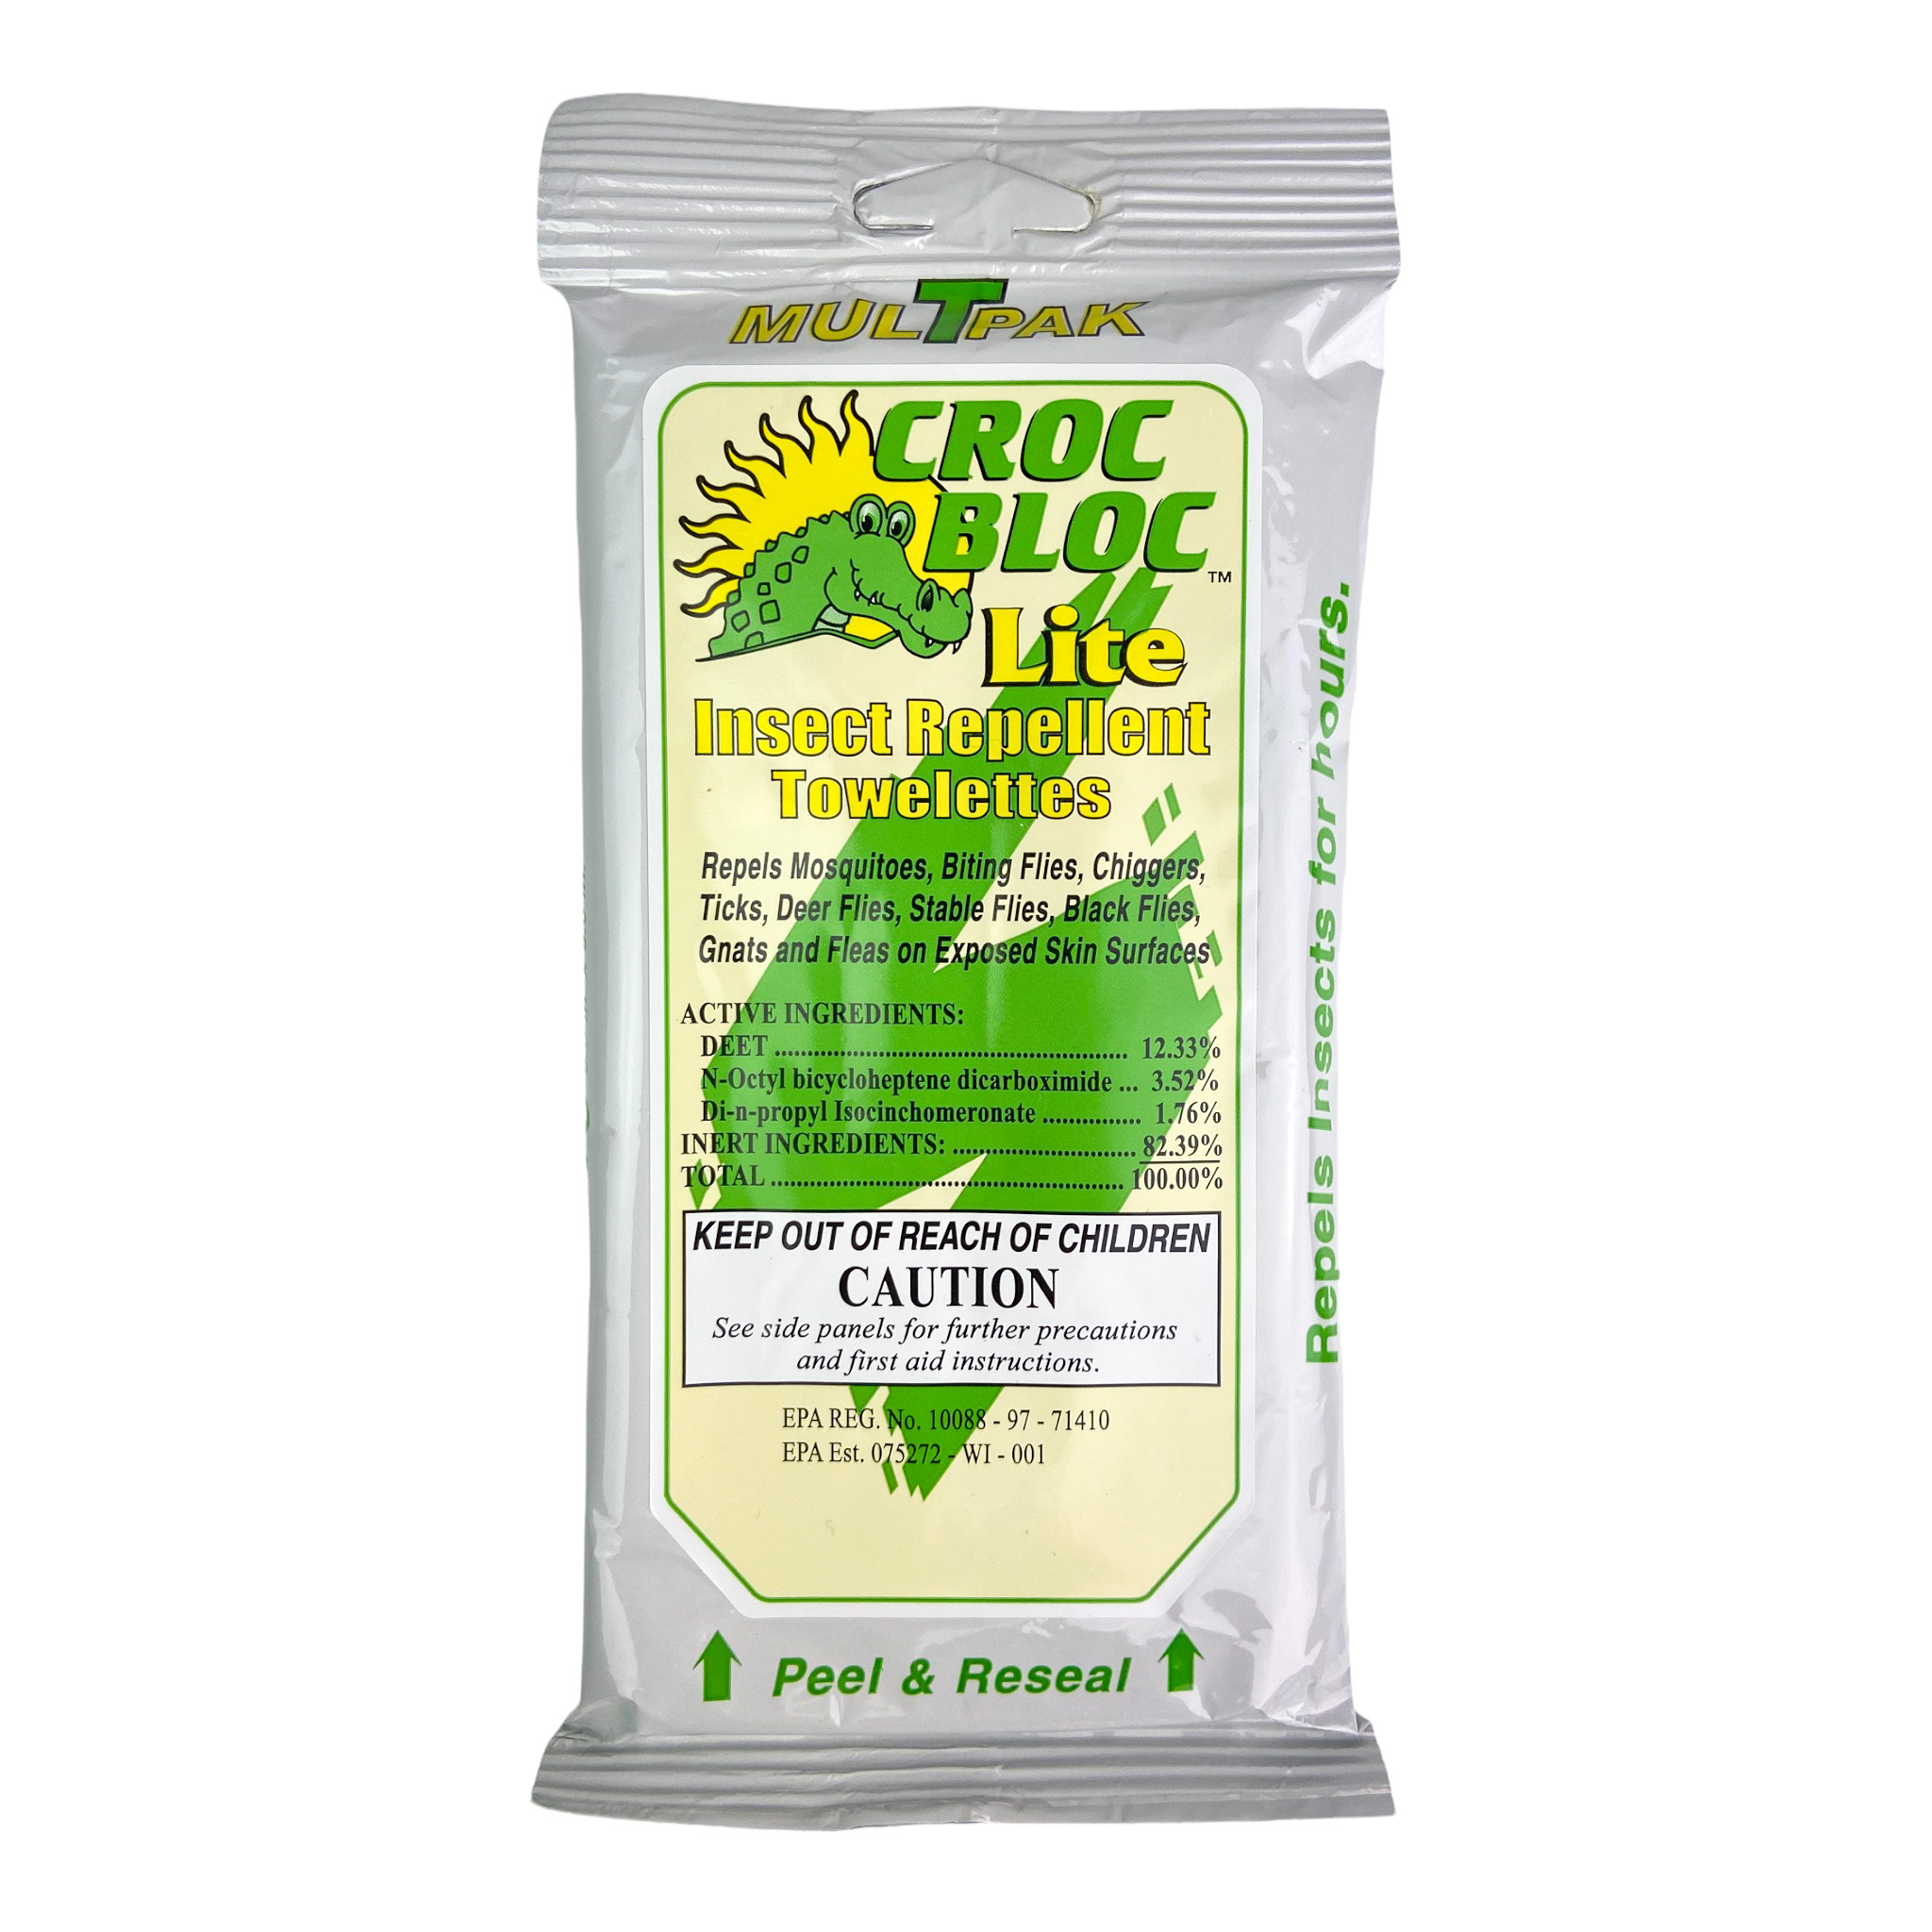 4-Pack Croc Bloc Insect Repellent, 16 Towelettes per pack